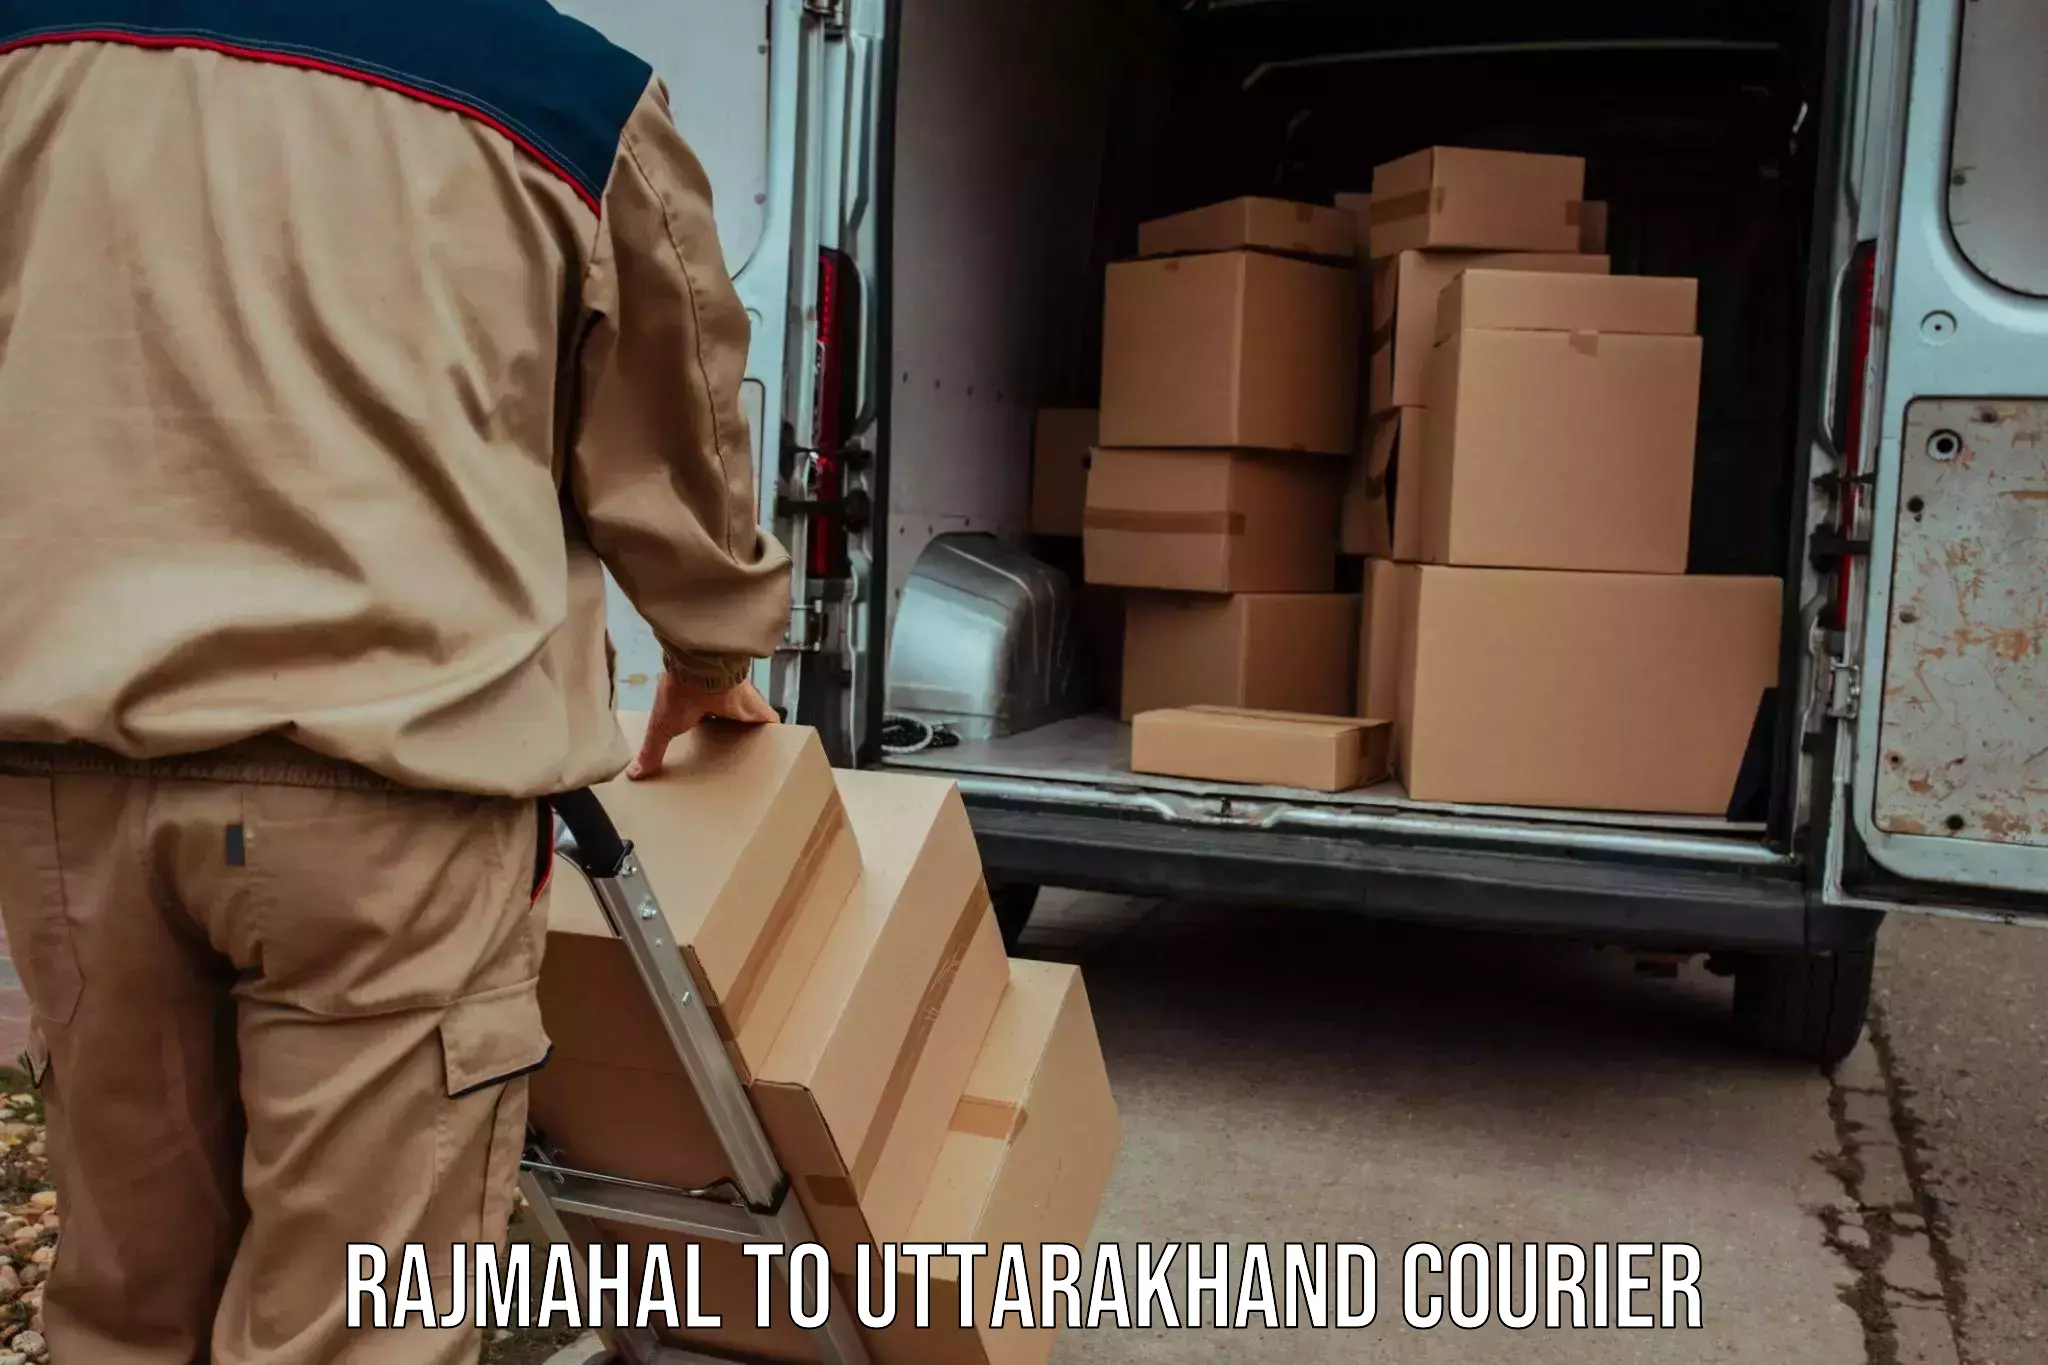 Next day courier Rajmahal to Lansdowne